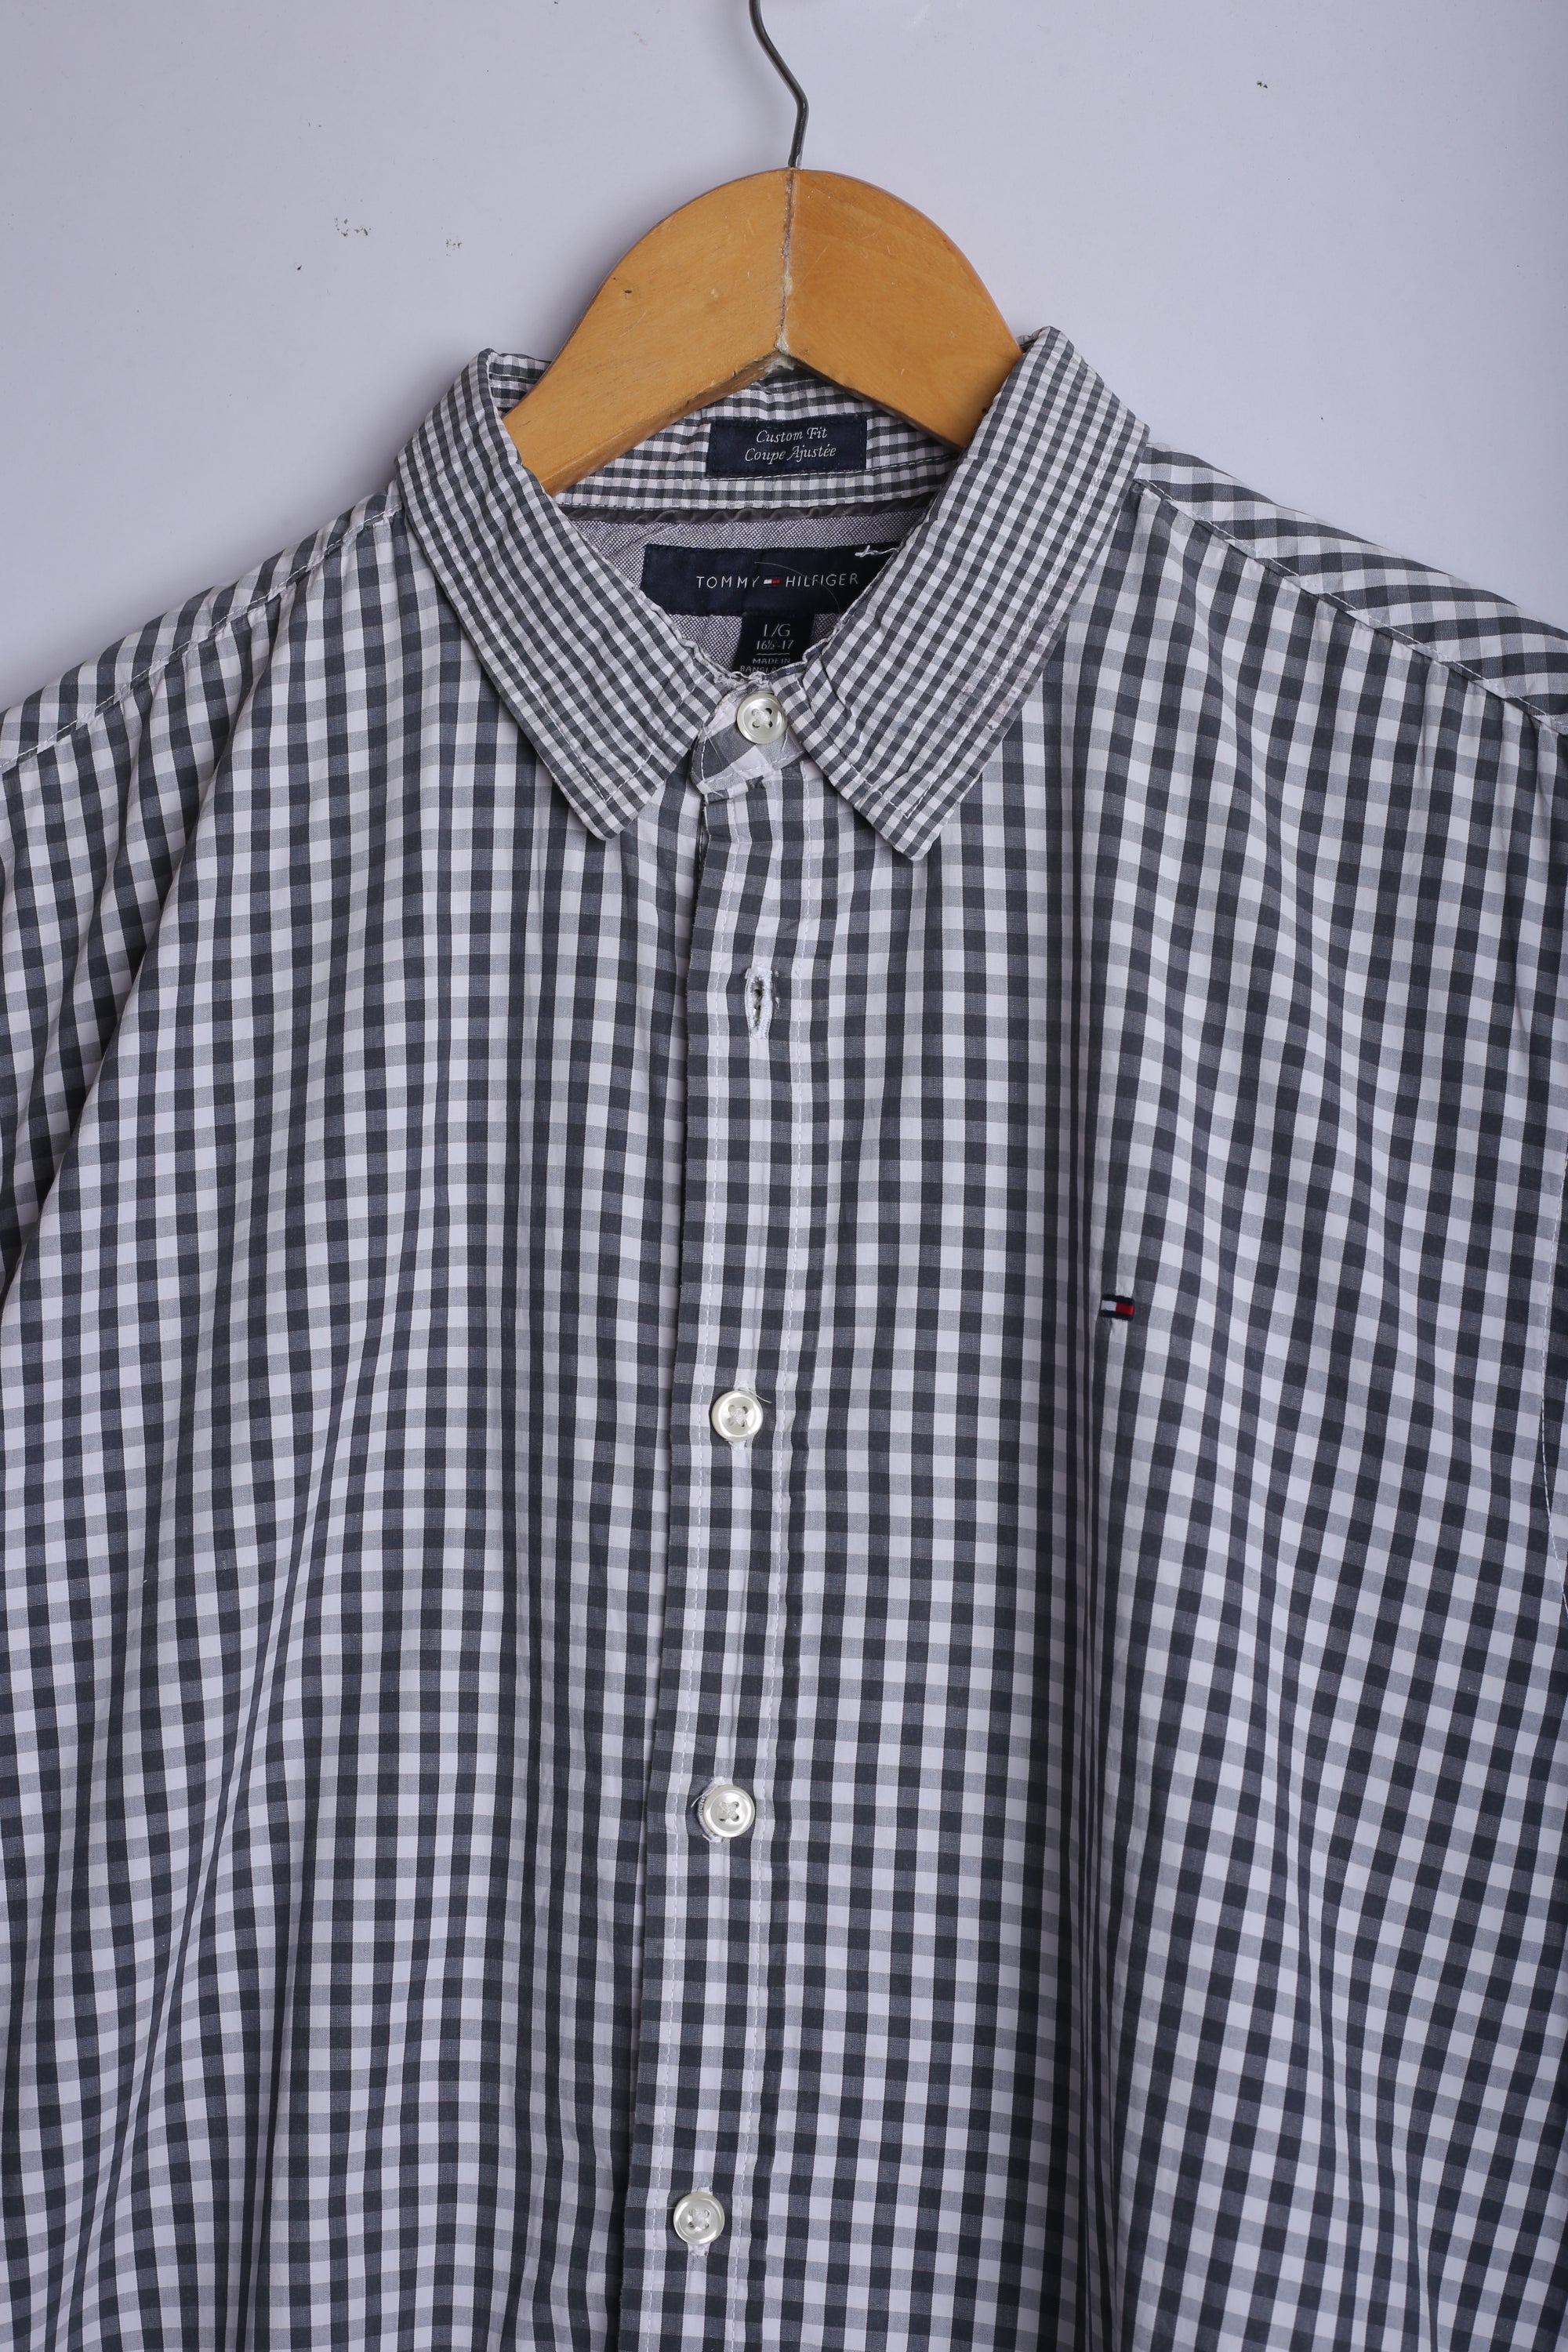 Vintage Tommy Hilfiger Shirt Black/White Checkred - Cotton